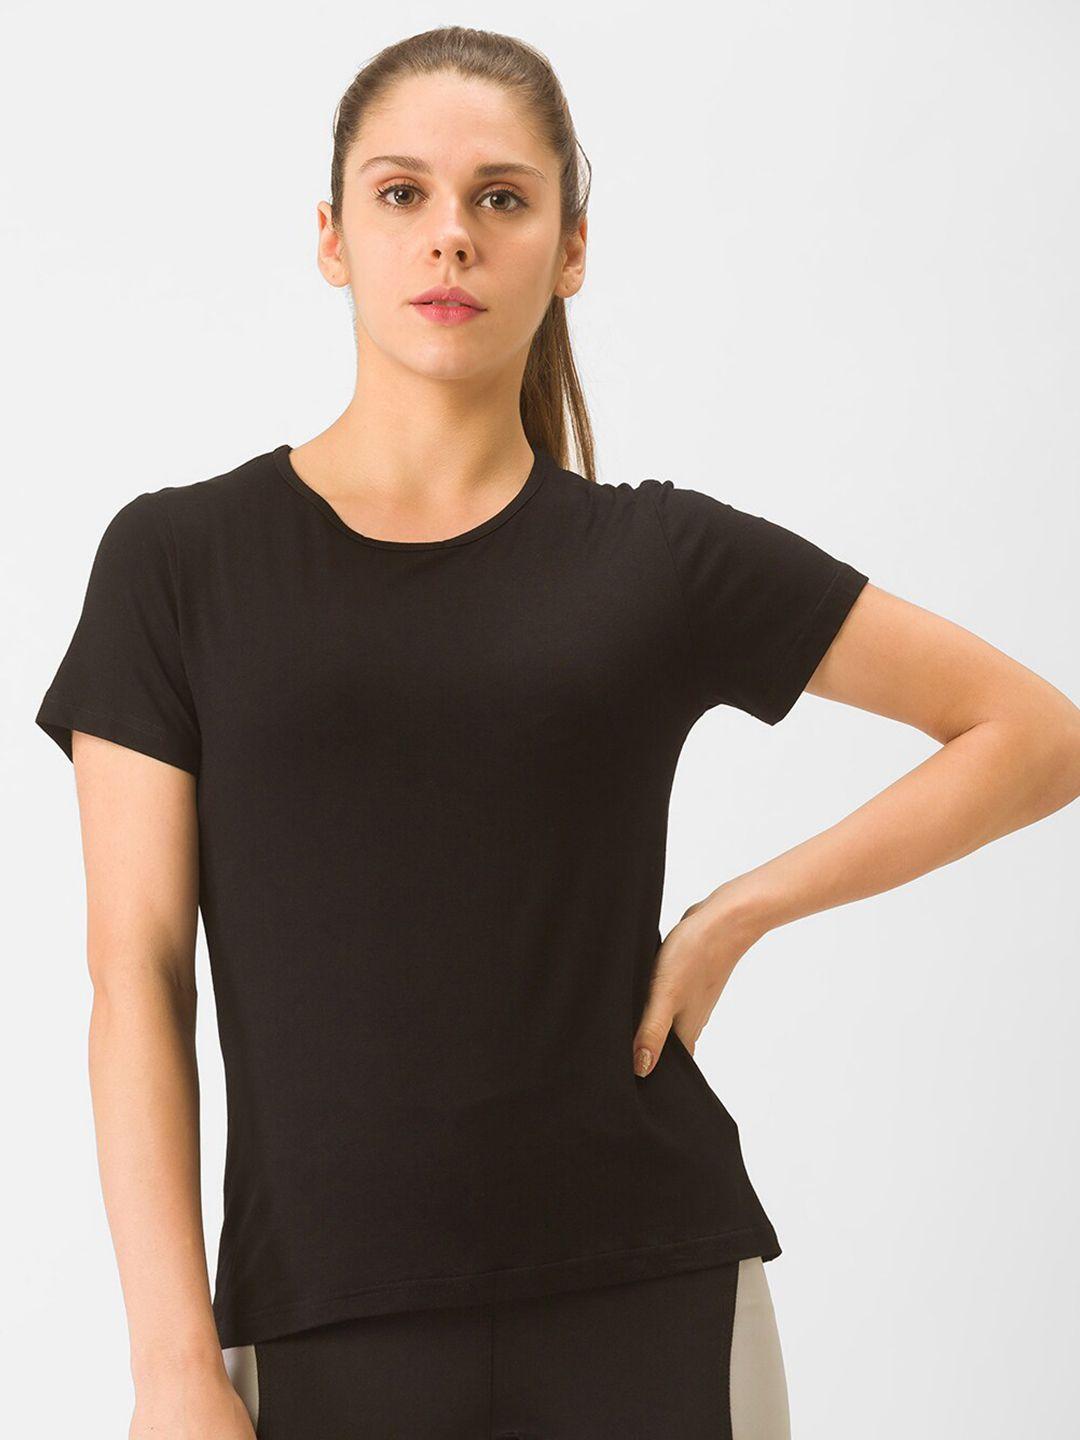 globus-women-black-solid-t-shirt